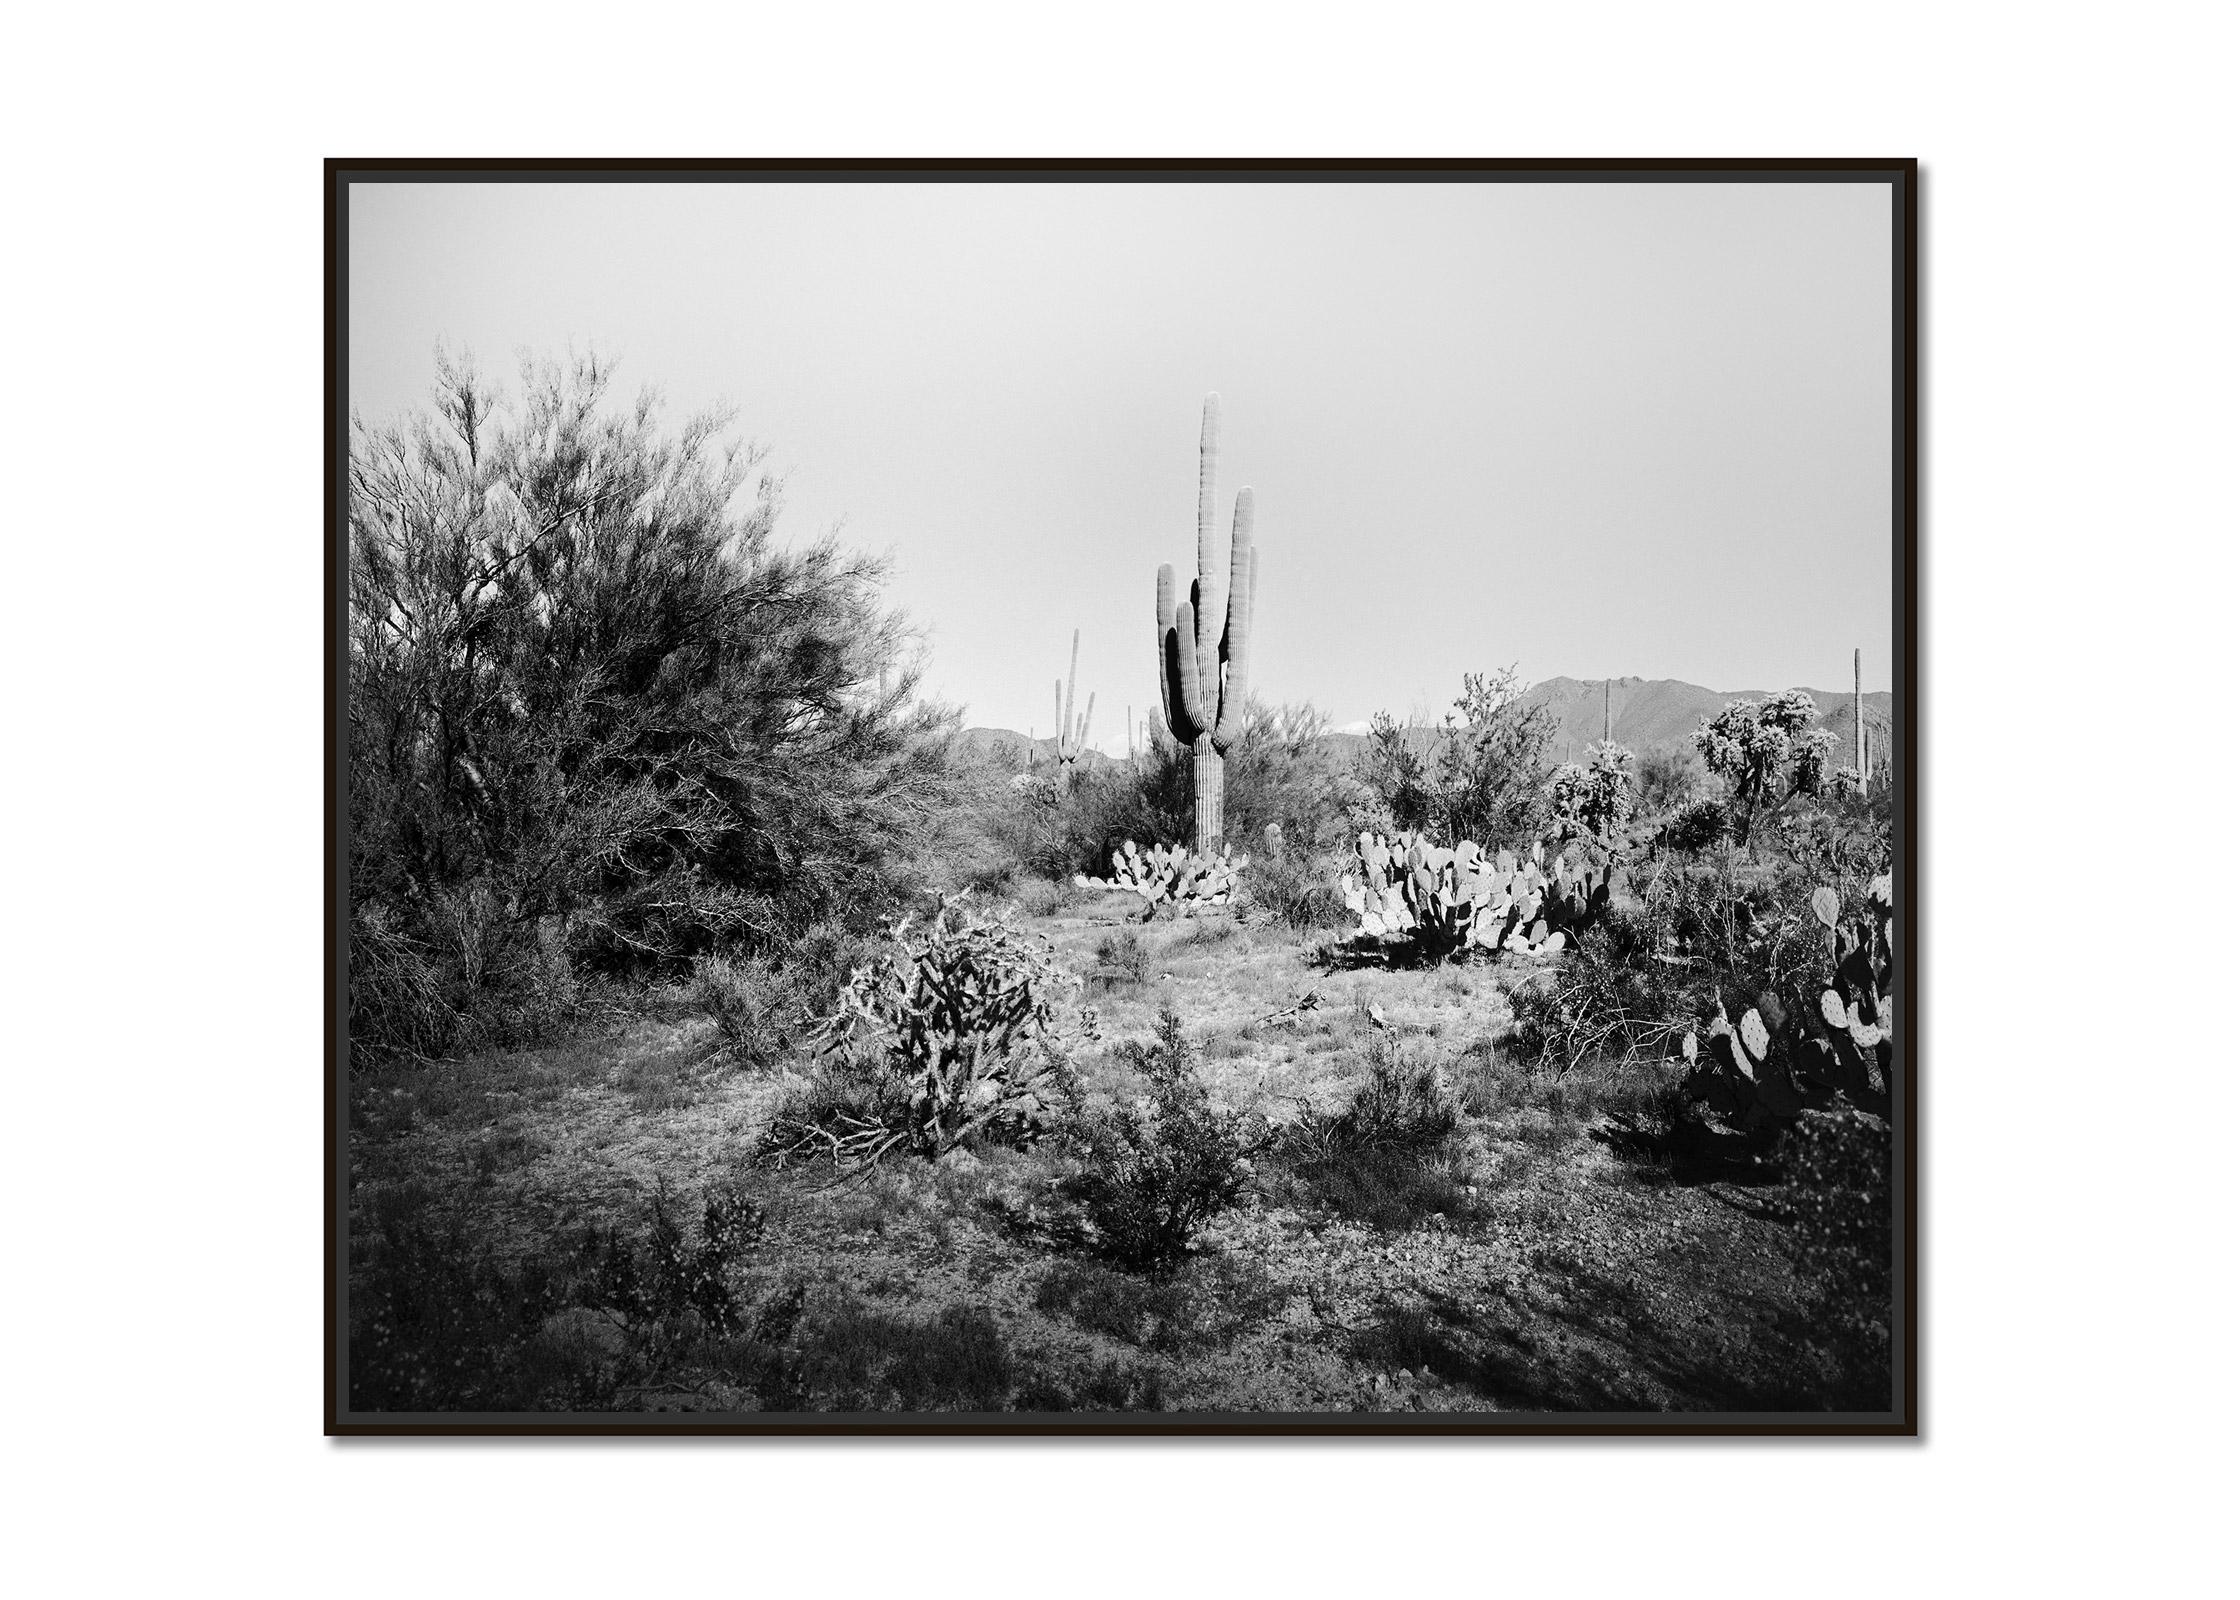 Saguaro Cactus, National Park, Arizona, USA, black and white landscape photo - Photograph by Gerald Berghammer